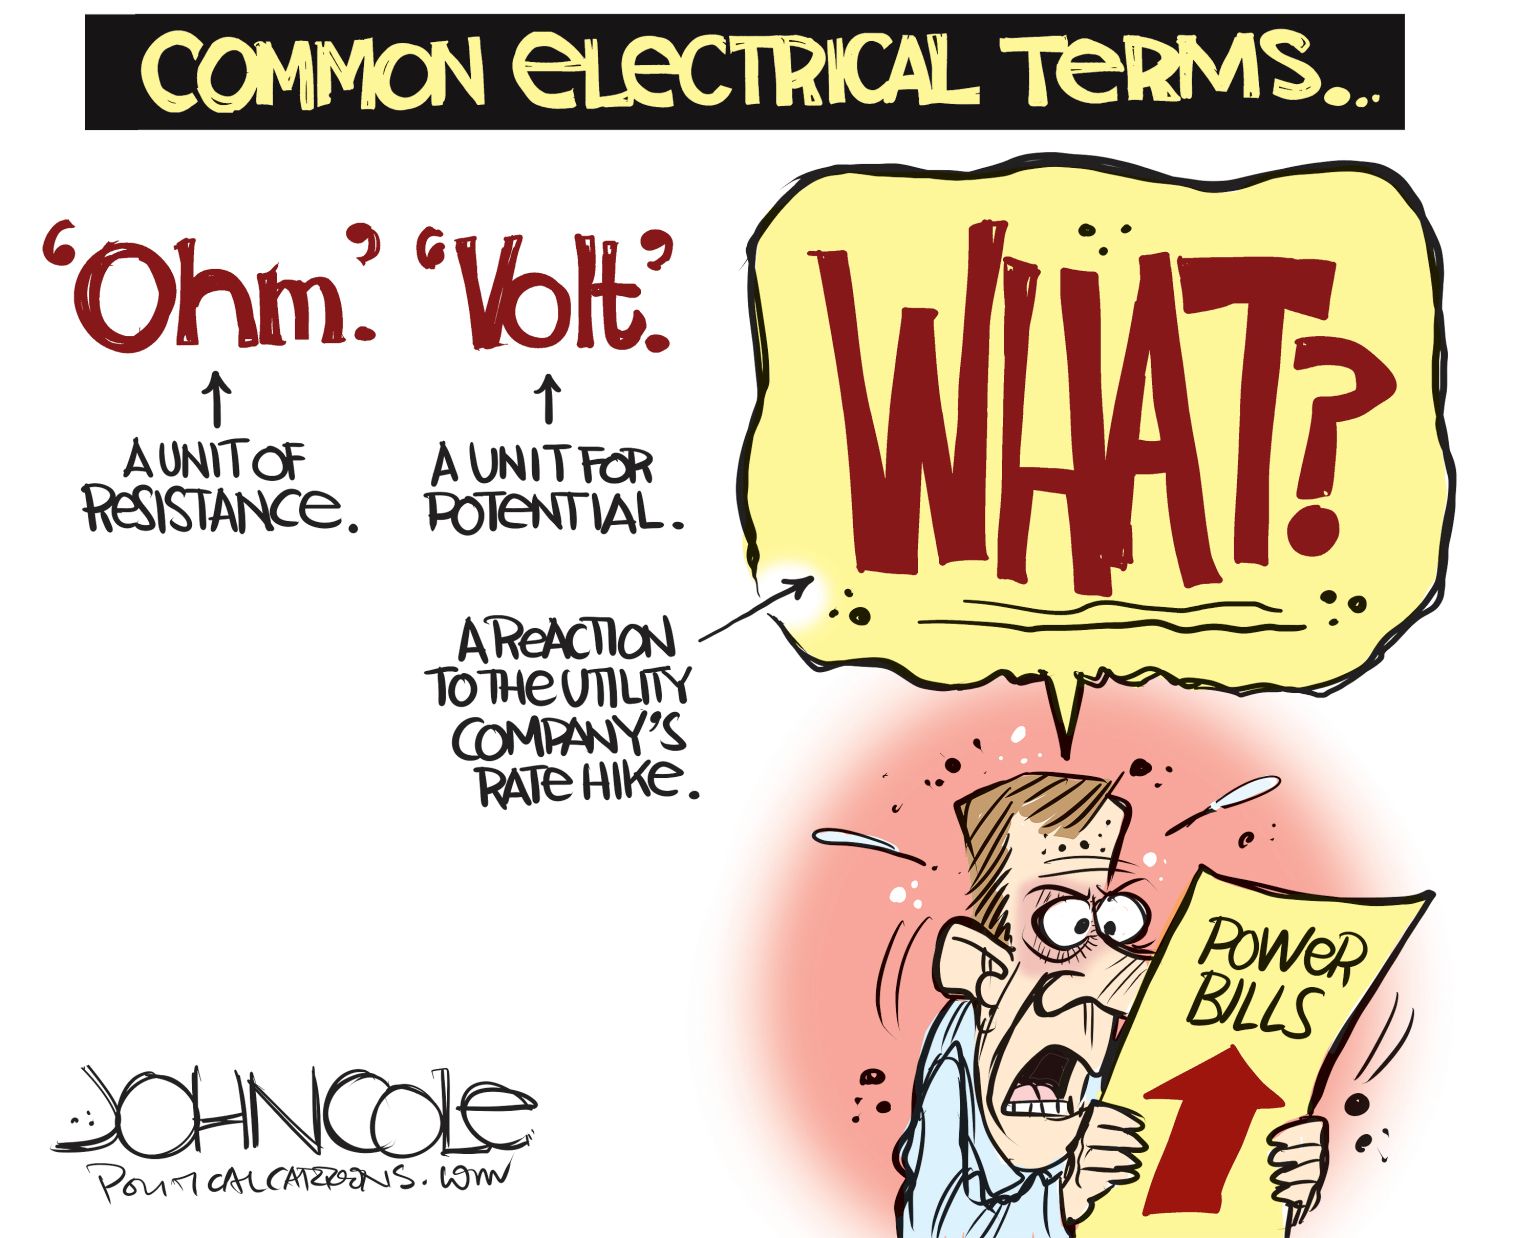 Electric rate hikes | News JustIN Political Cartoon - newsjustin.press